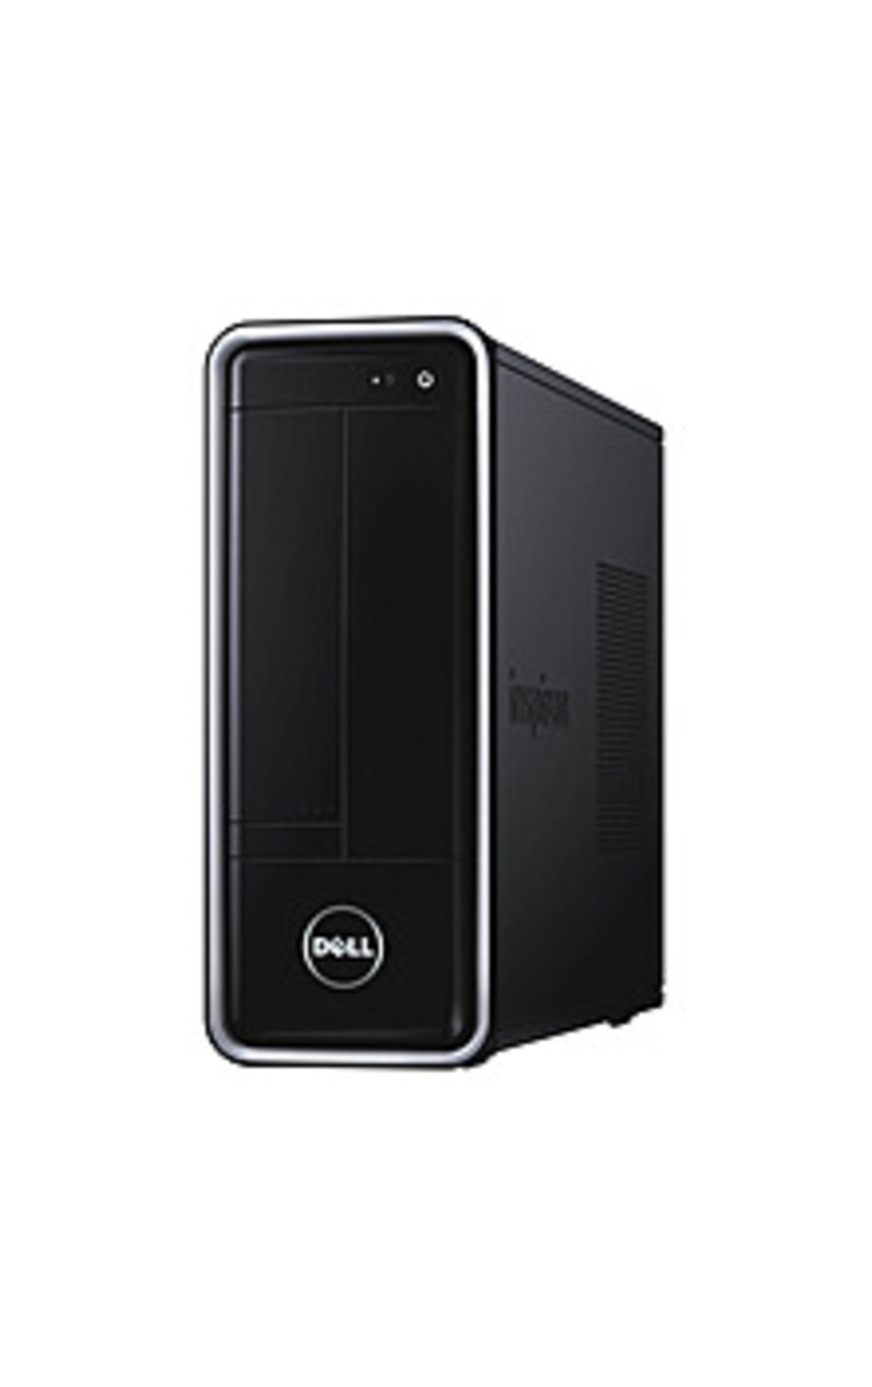 Dell Inspiron 3646 I3646-1000BLK Desktop PC - Intel Celeron J1800 2.41 GHz Dual-Core Processor - 4 GB DDR3L RAM - 500 GB Hard Drive - Windows 8.1 64-b